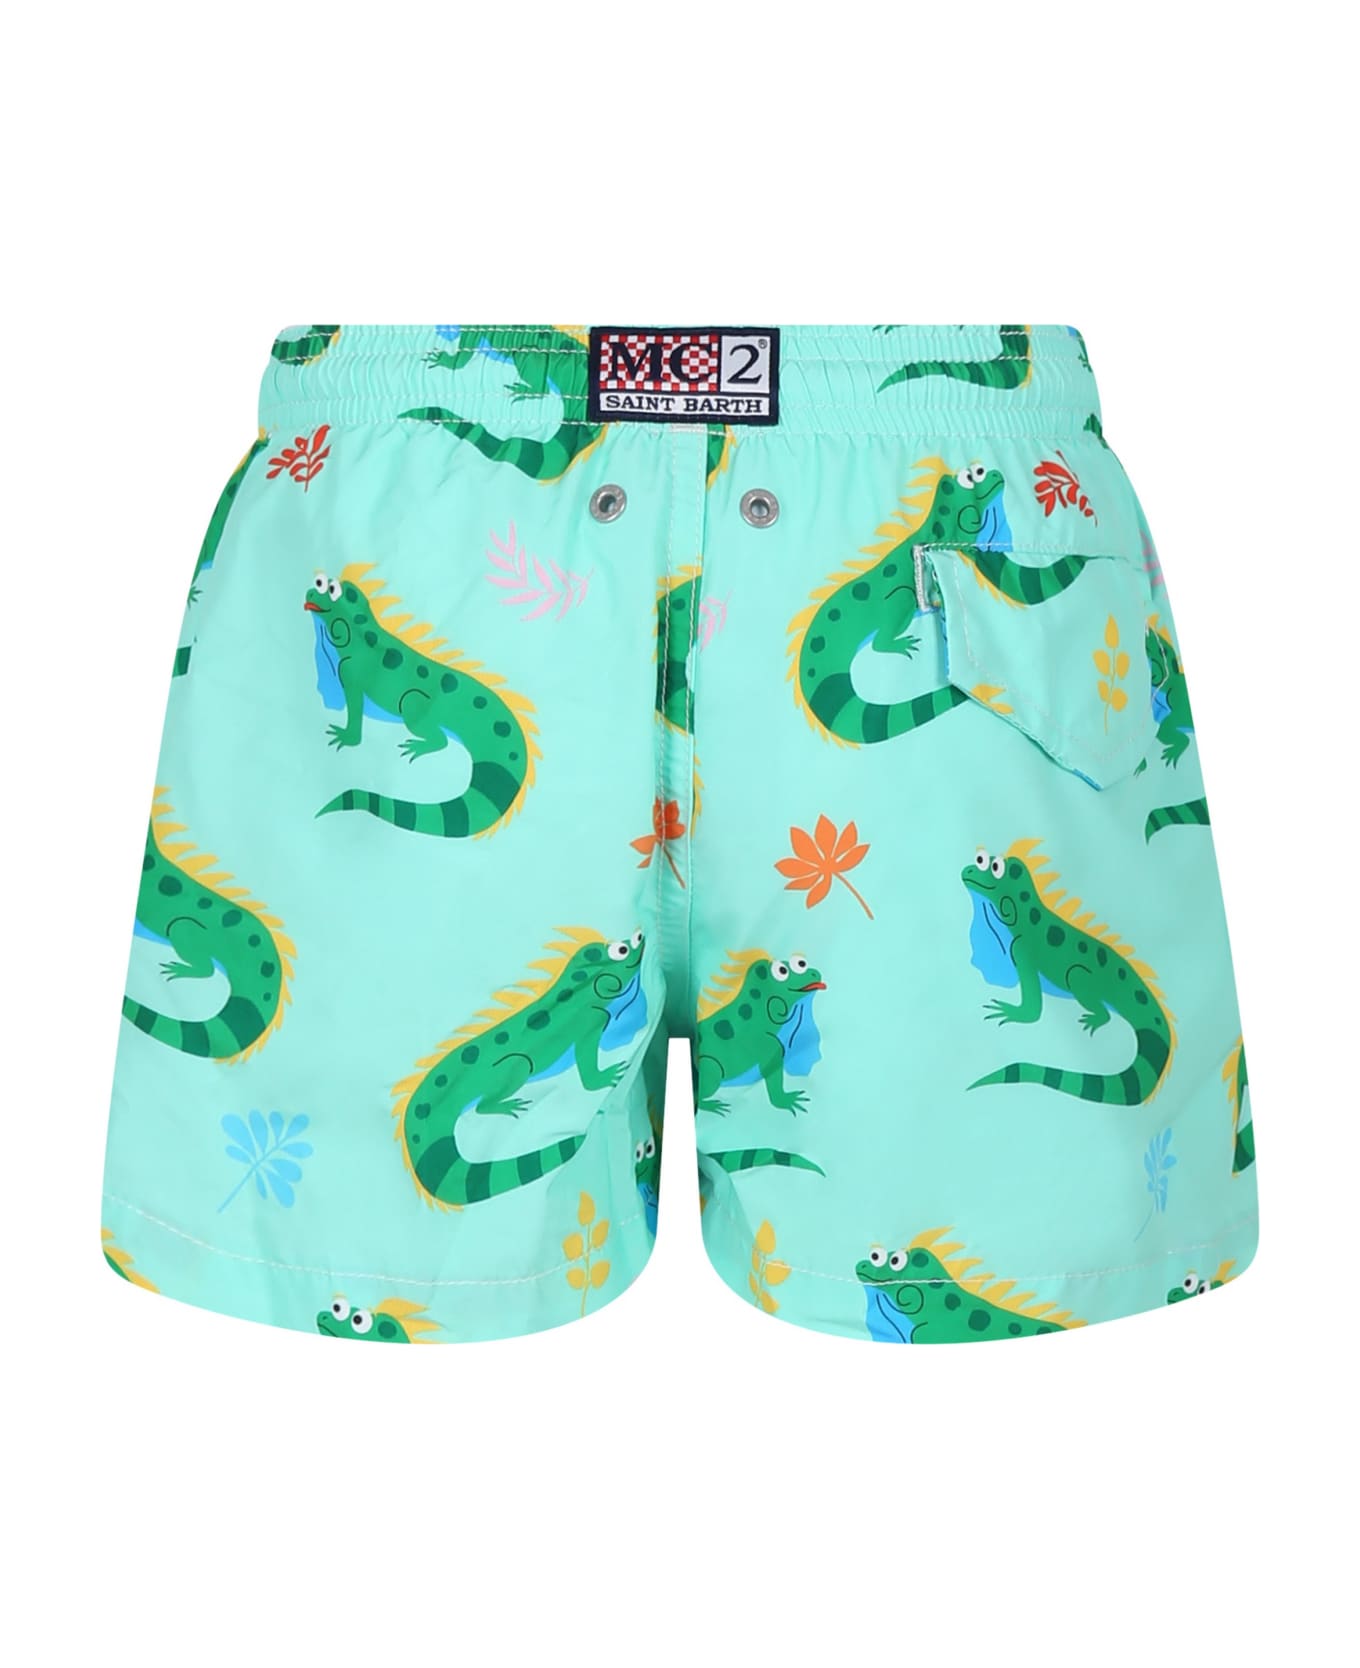 MC2 Saint Barth Green Swimshorts For Boy With Iguana Print And Logo - Green 水着